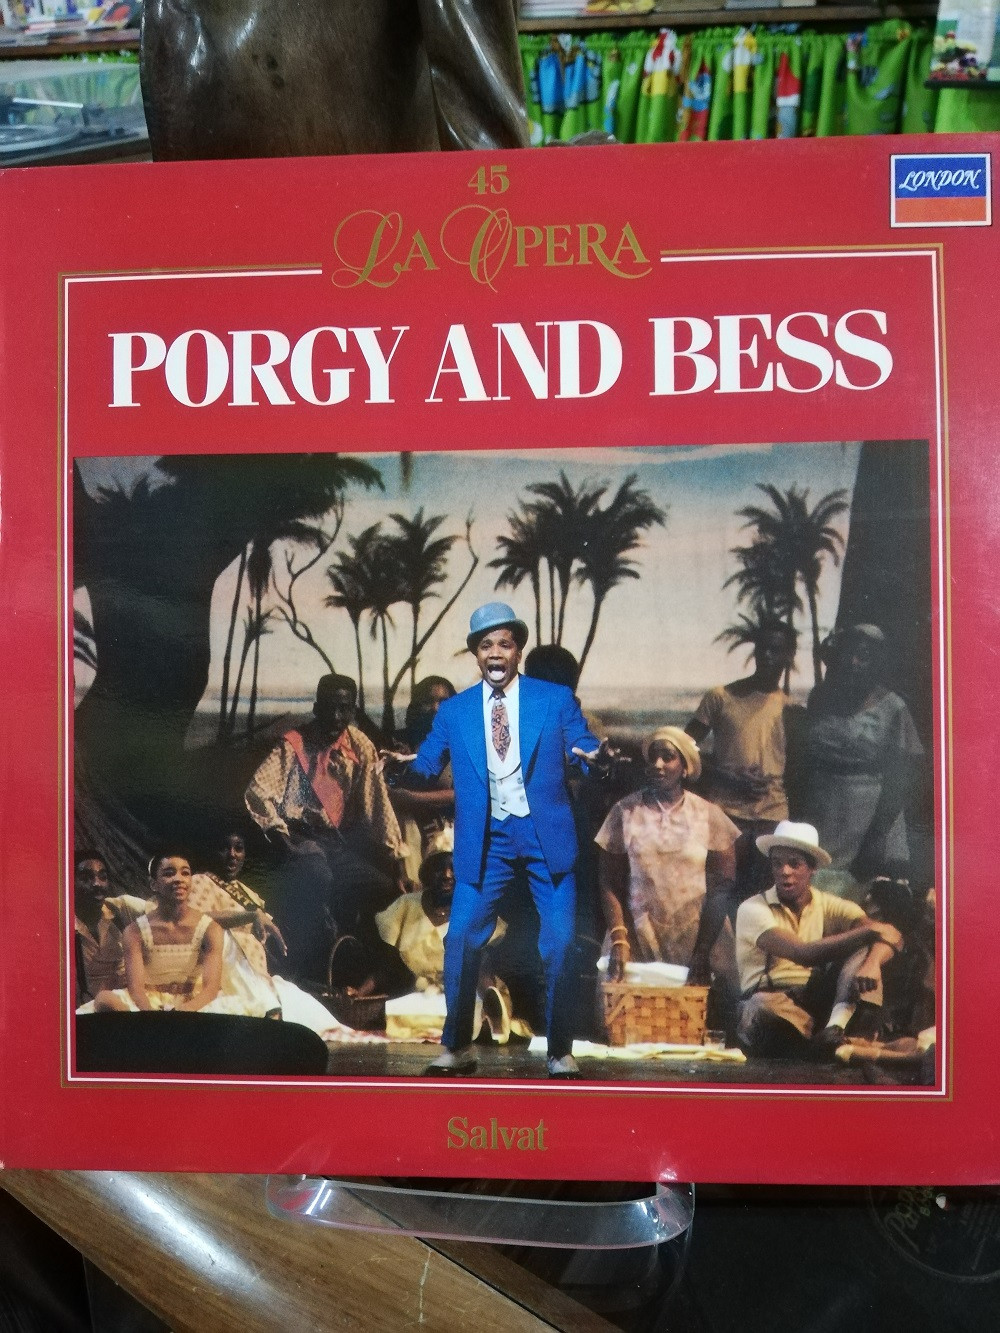 Imagen LP PORGY AND BESS LA OPERA - GEORGE GERSHWIN